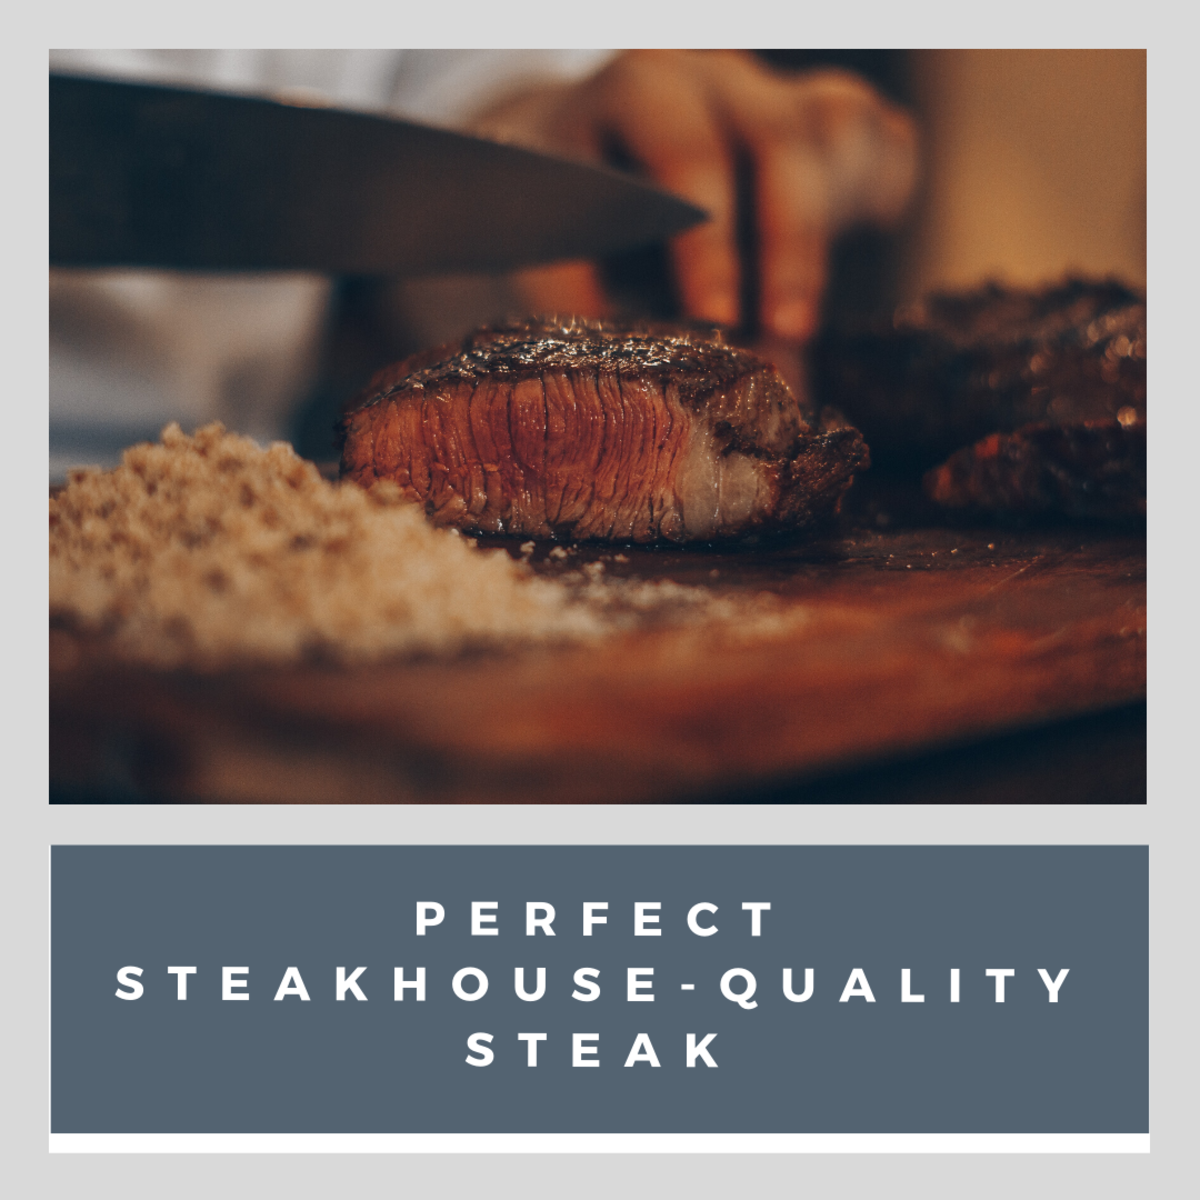 Crusty, brown, seared steak. Perfect.